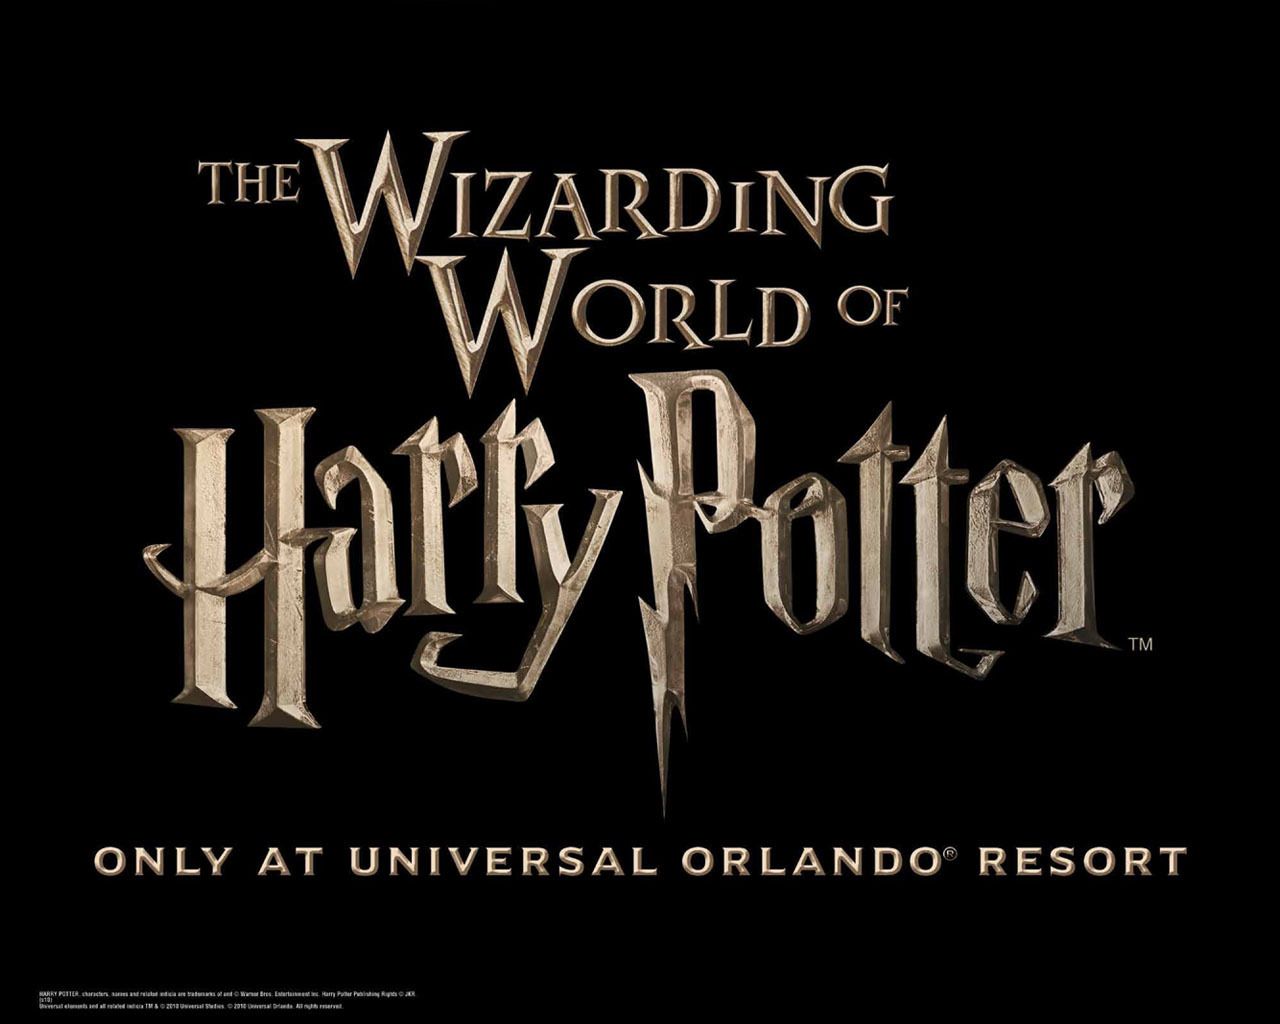 Wizarding World of Harry Potter Wallpaper. Wizarding World of Harry Potter Wallpaper, The Wizarding World of Harry Potter Wallpaper and Harry Potter iPhone Wallpaper